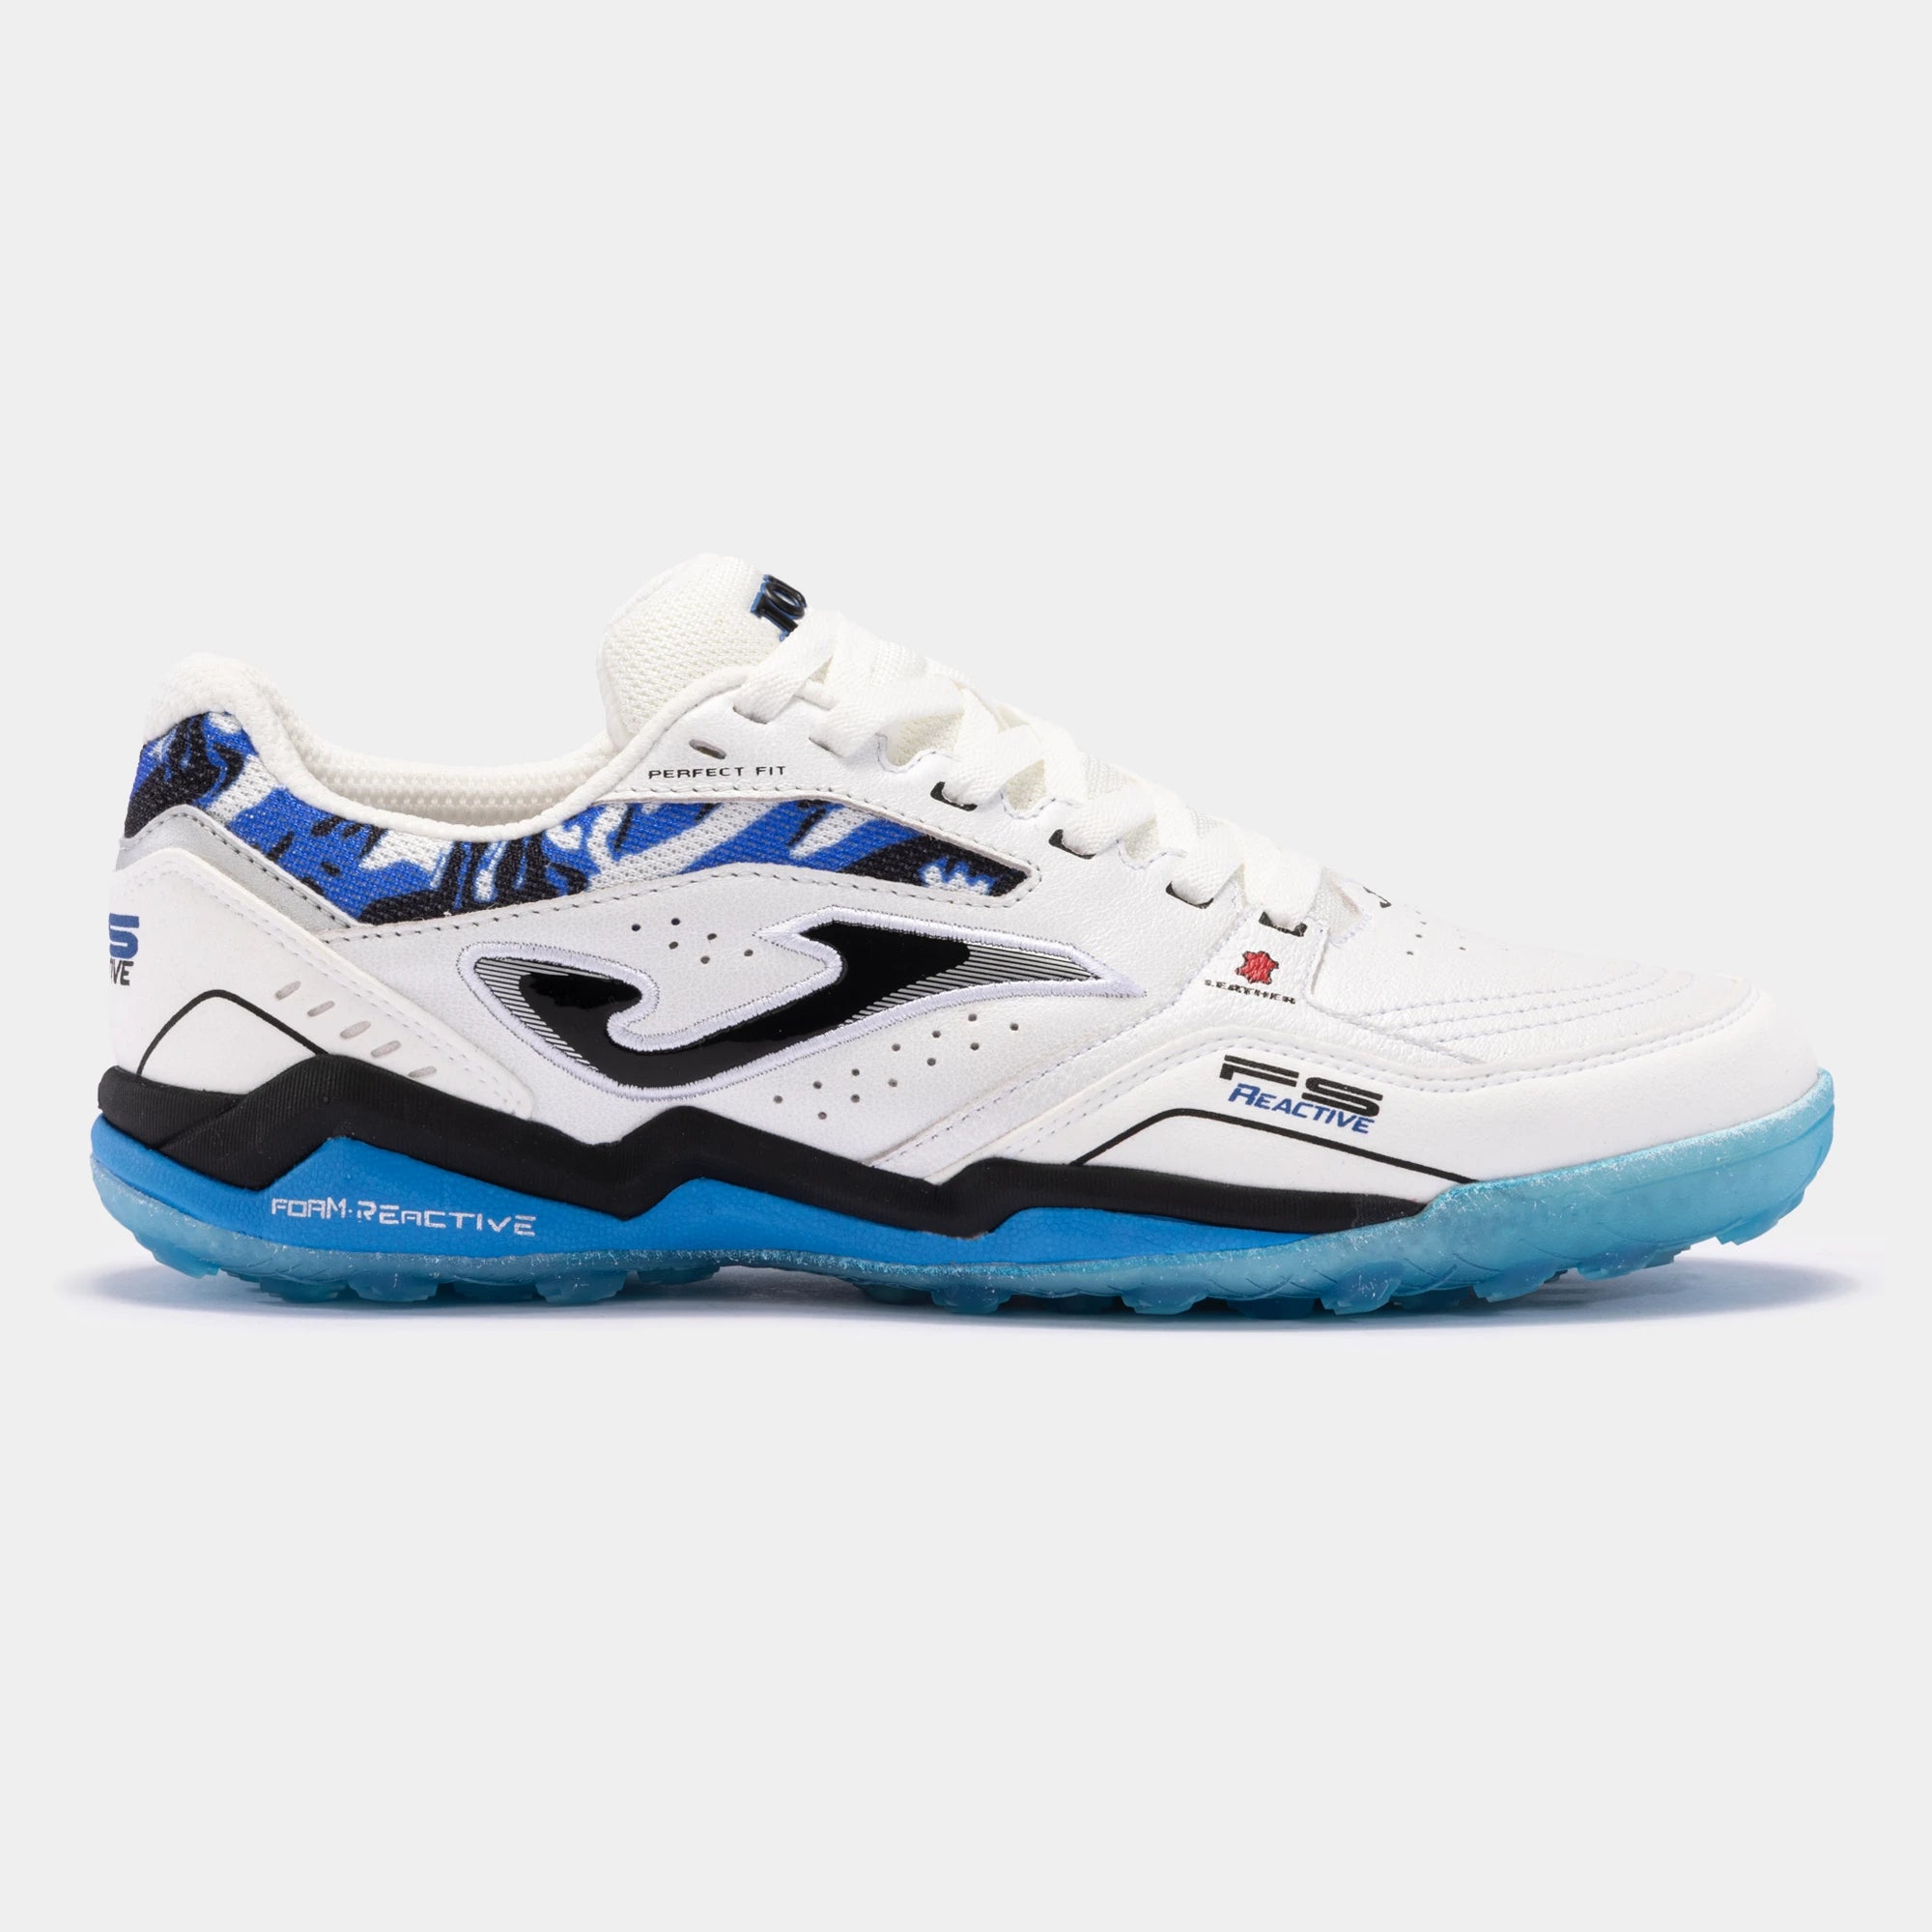 Comprar blue Joma FS Reactive 2302 Turf Soccer Shoes